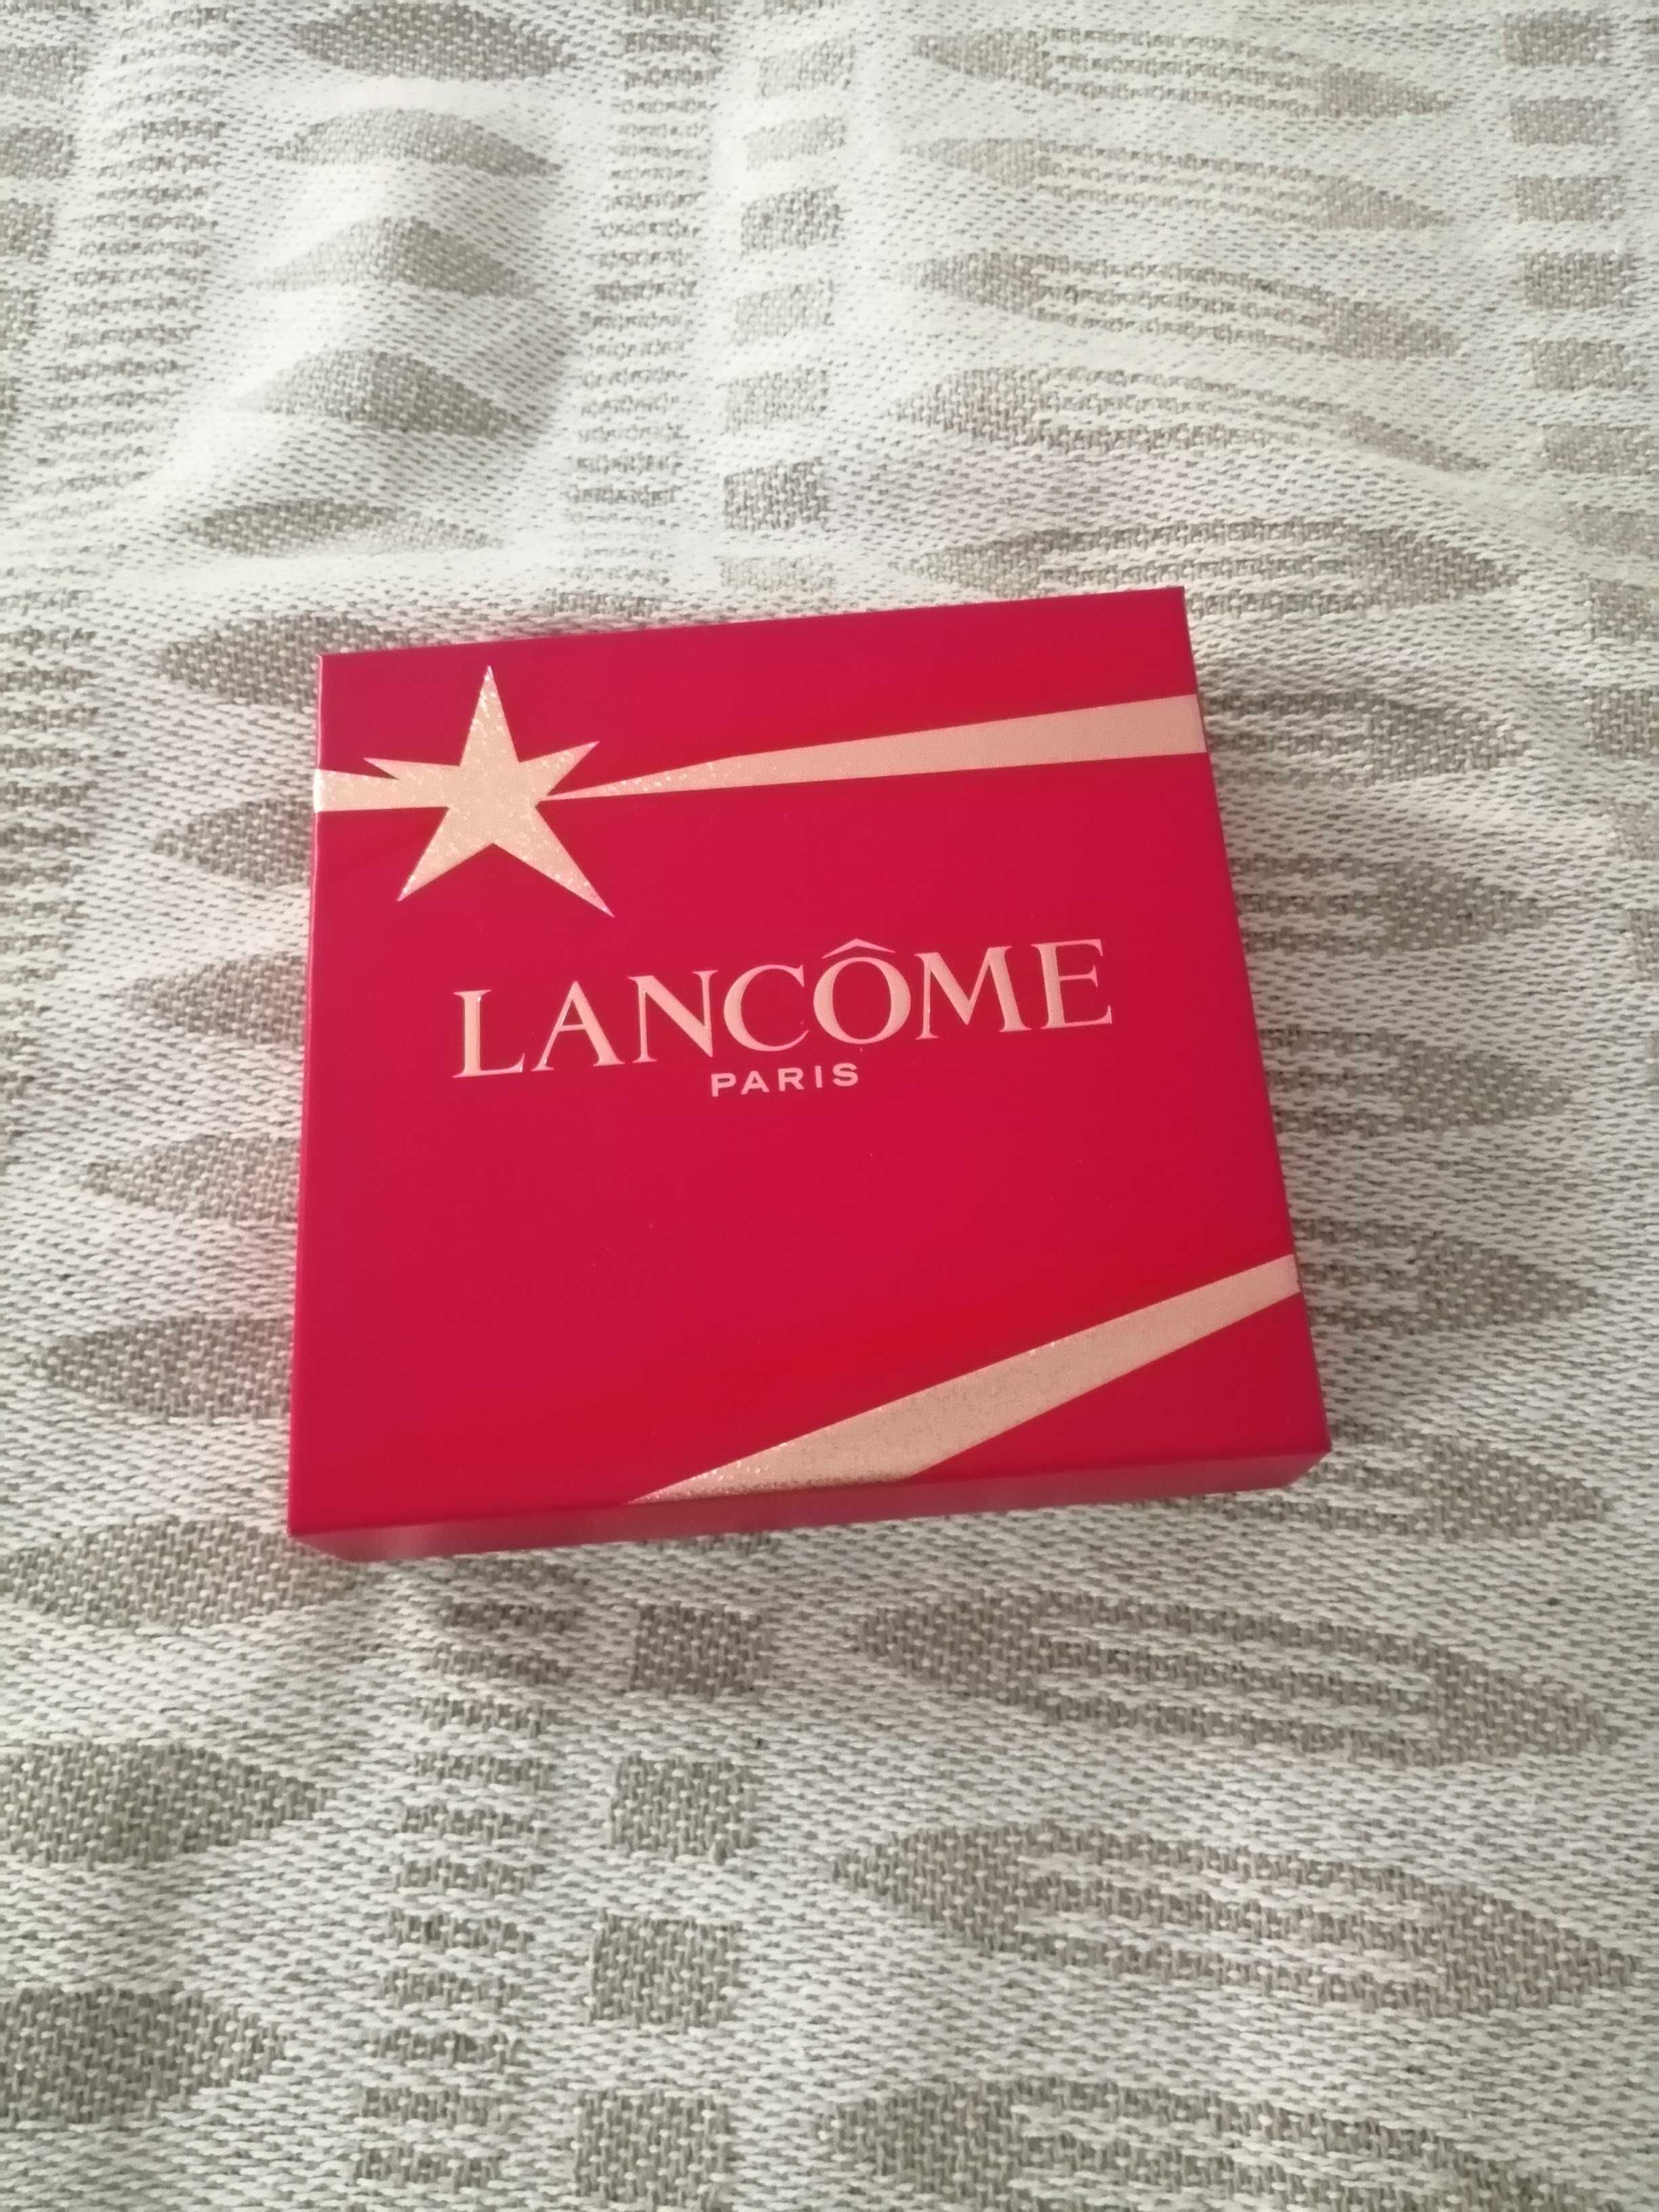 Parfum Lancome original